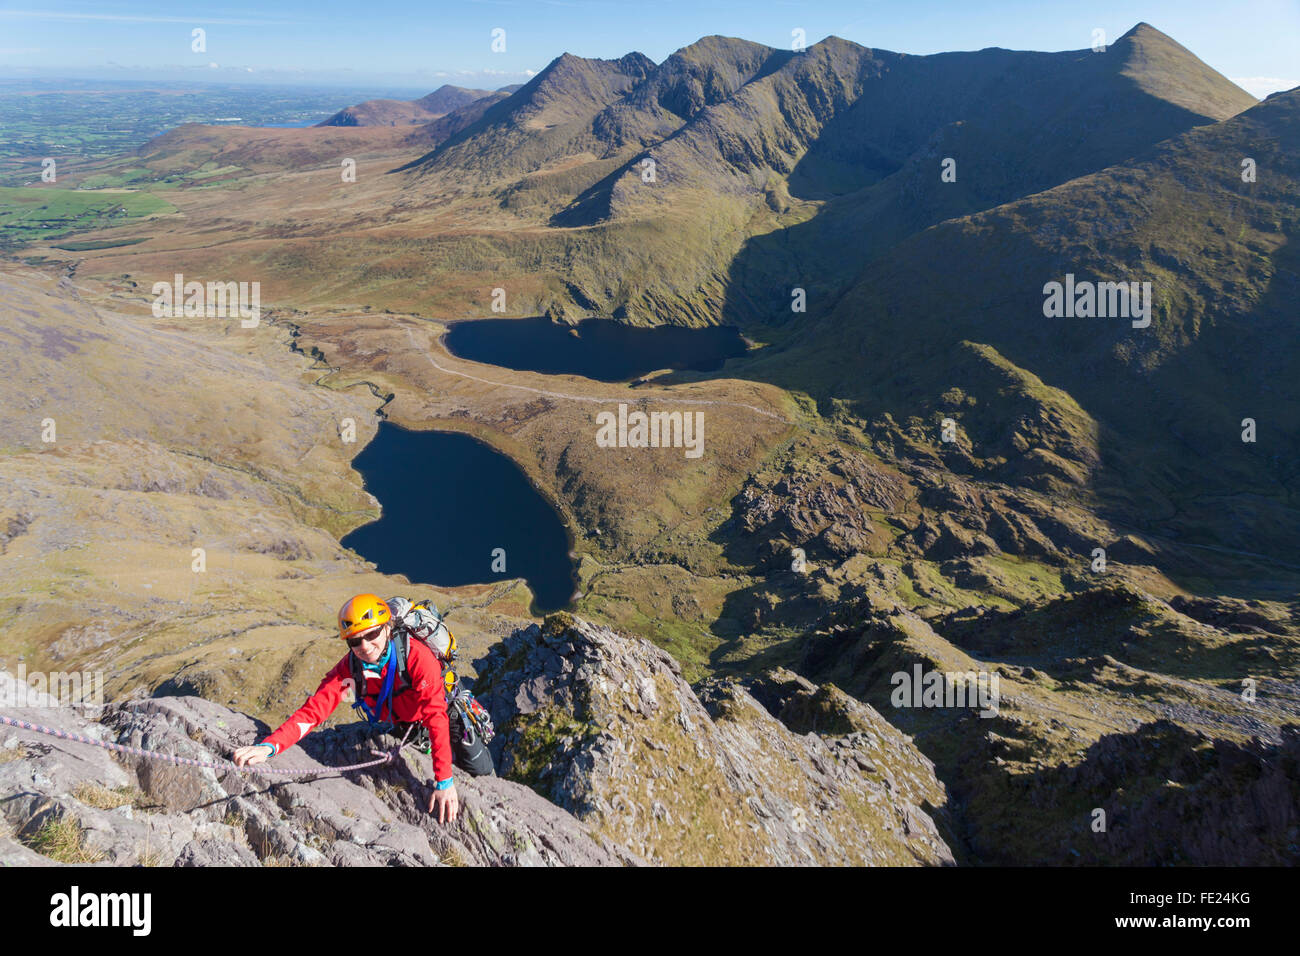 Kletterer auf heulenden Bergrücken oberhalb Hag es Glen, Carrauntoohil, MacGillycuddy Reeks, County Kerry, Irland. Stockfoto